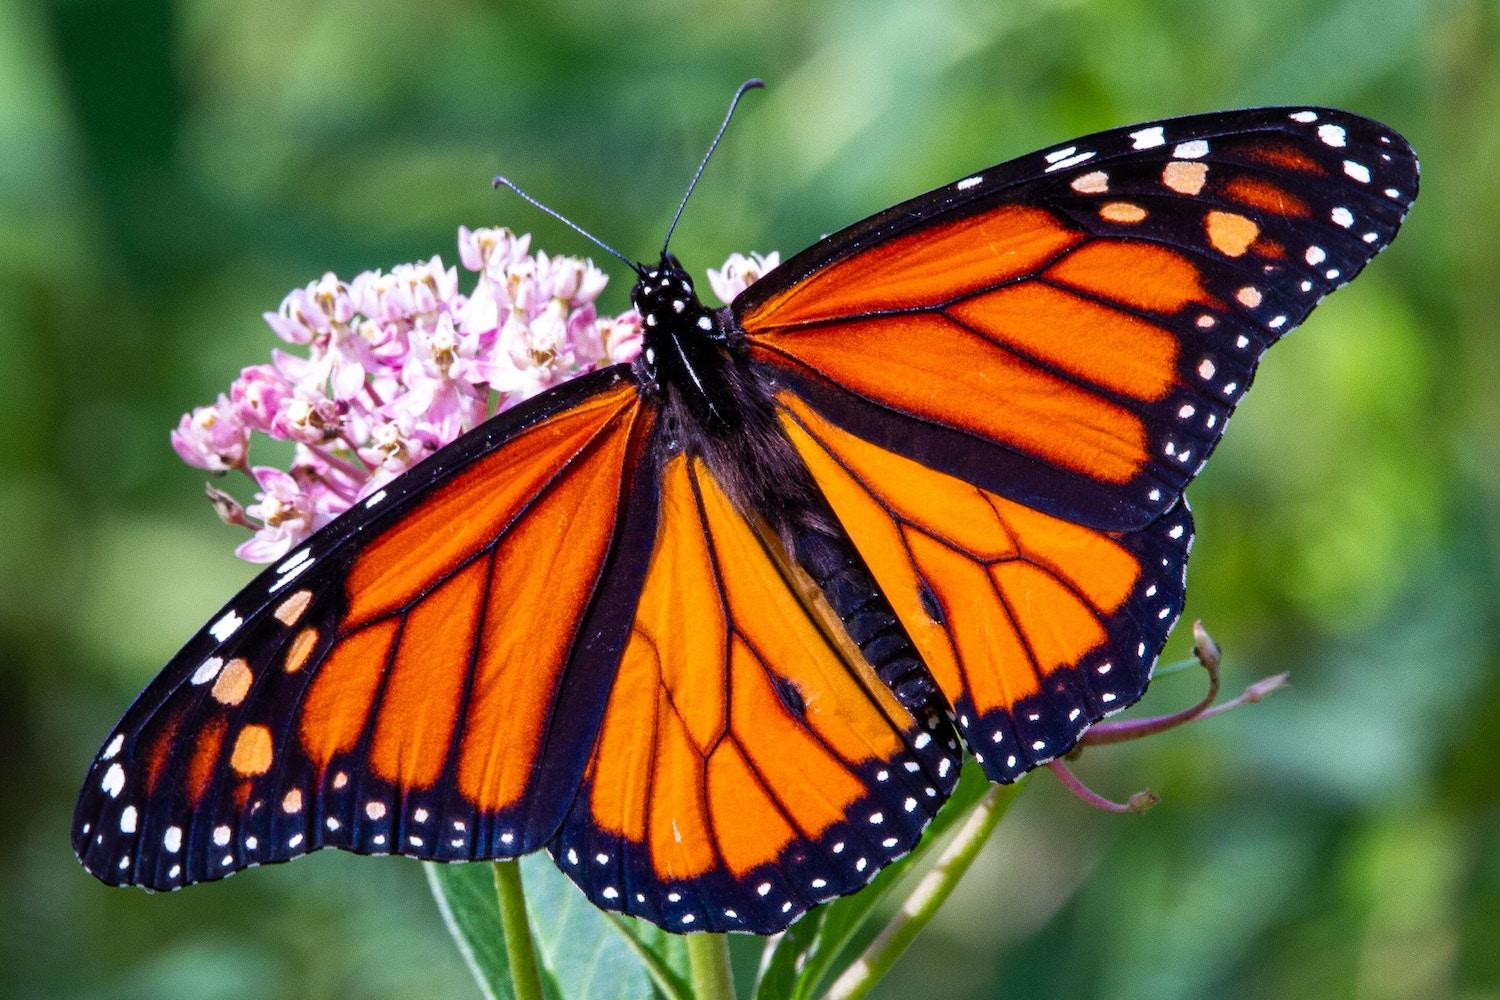 A monarch butterfly on a flower.